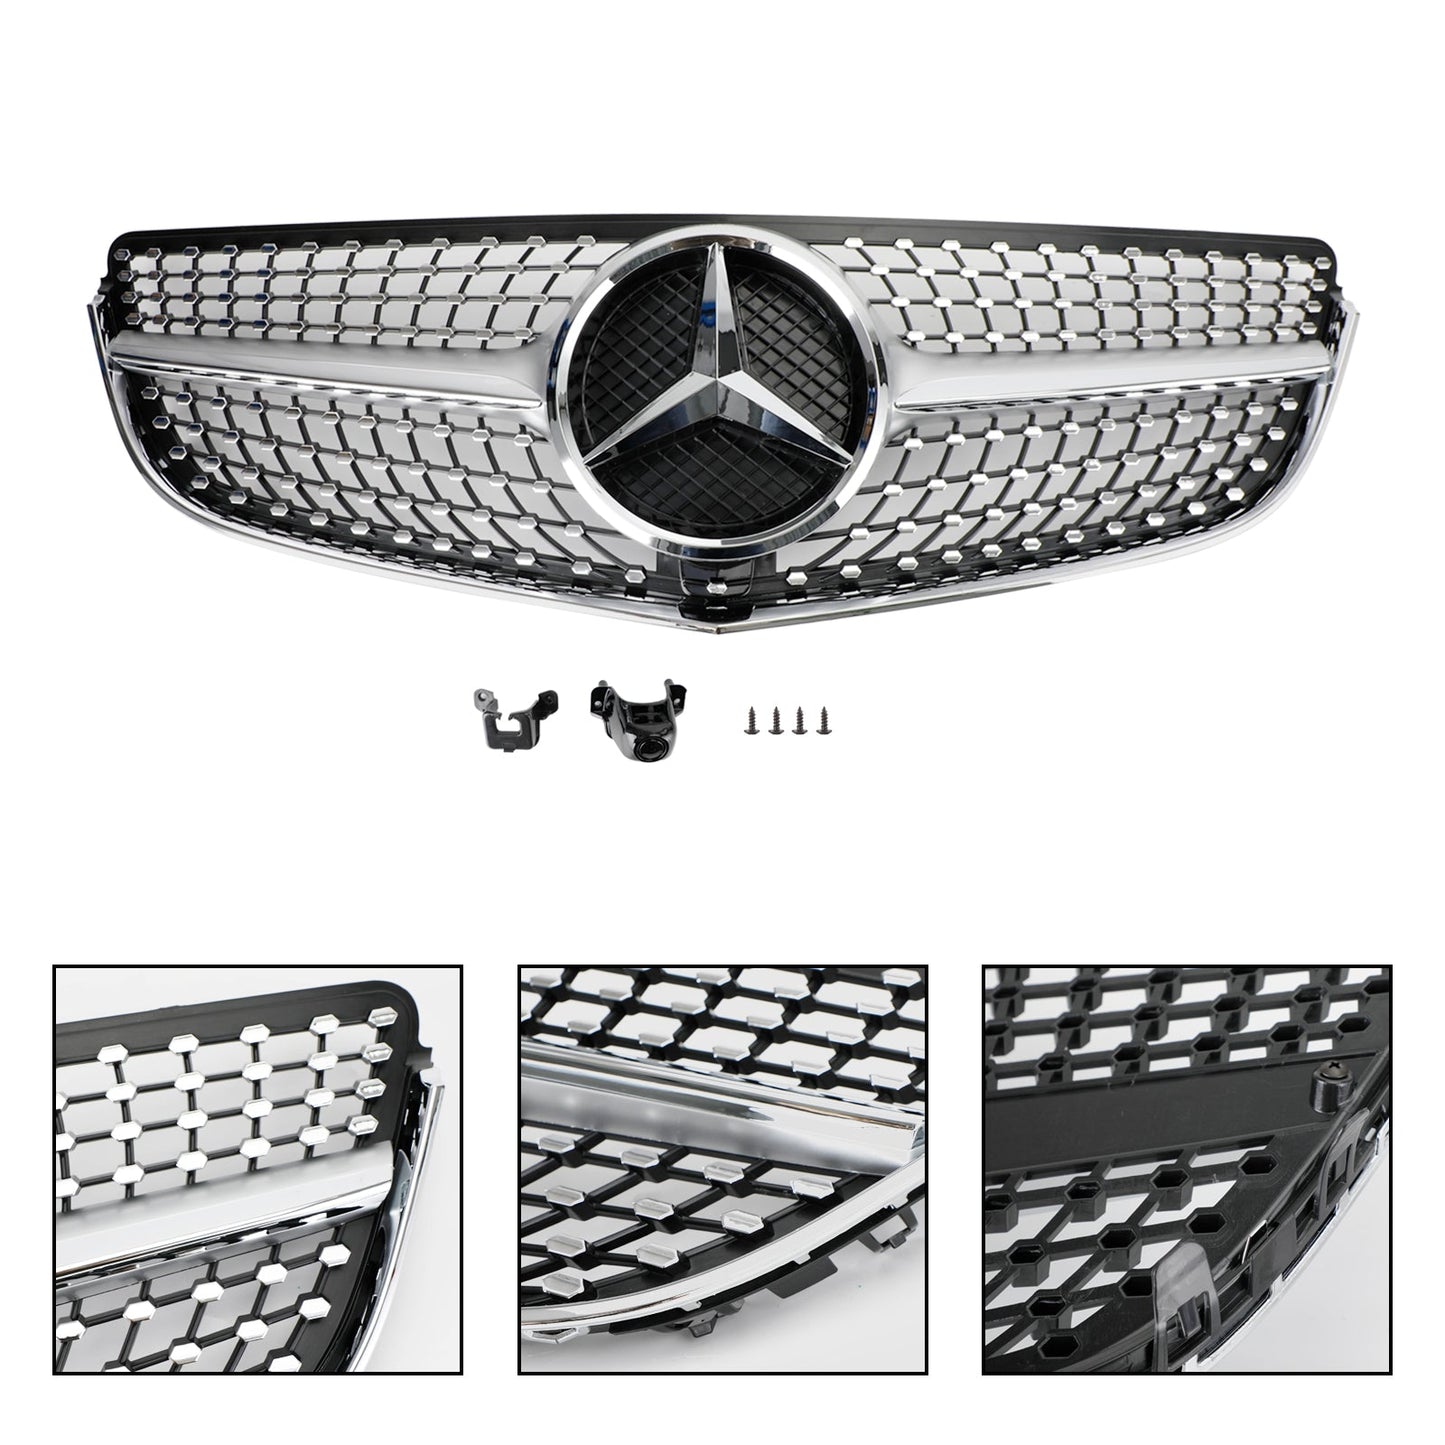 E-CLASS W207 2014-2017 Benz Mercedes Grill Coupe Front Bumper Grille Grill Diamond